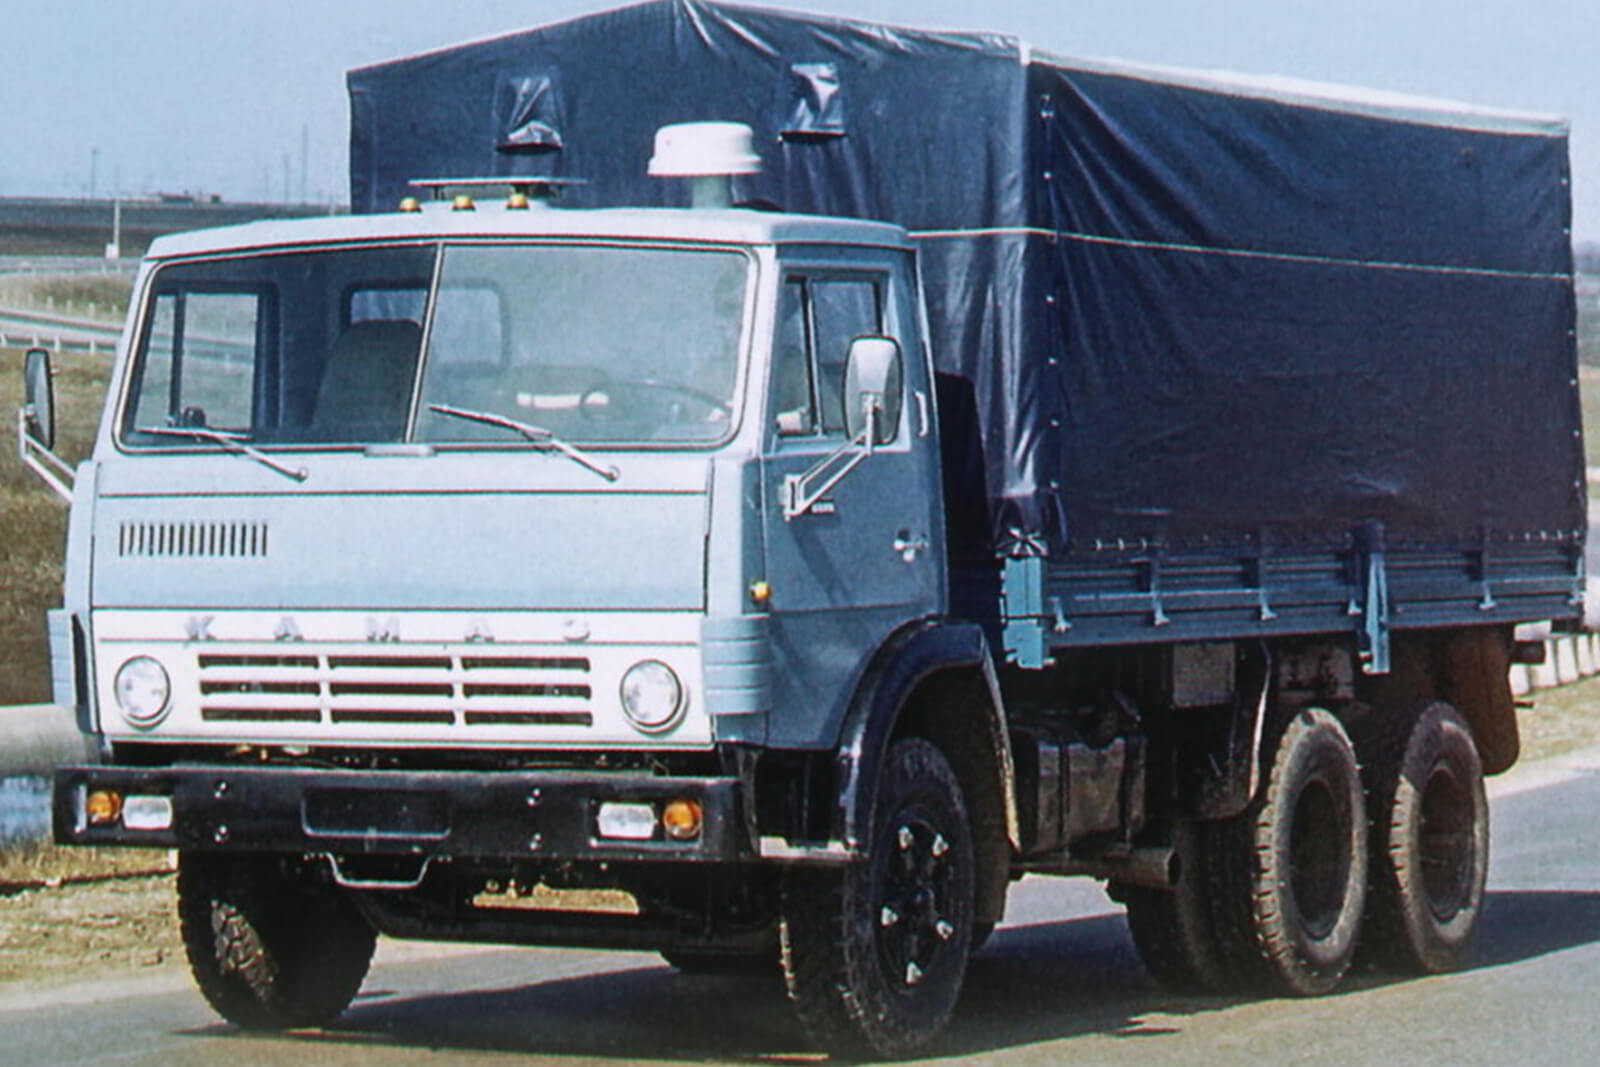 КАМАЗ-5320